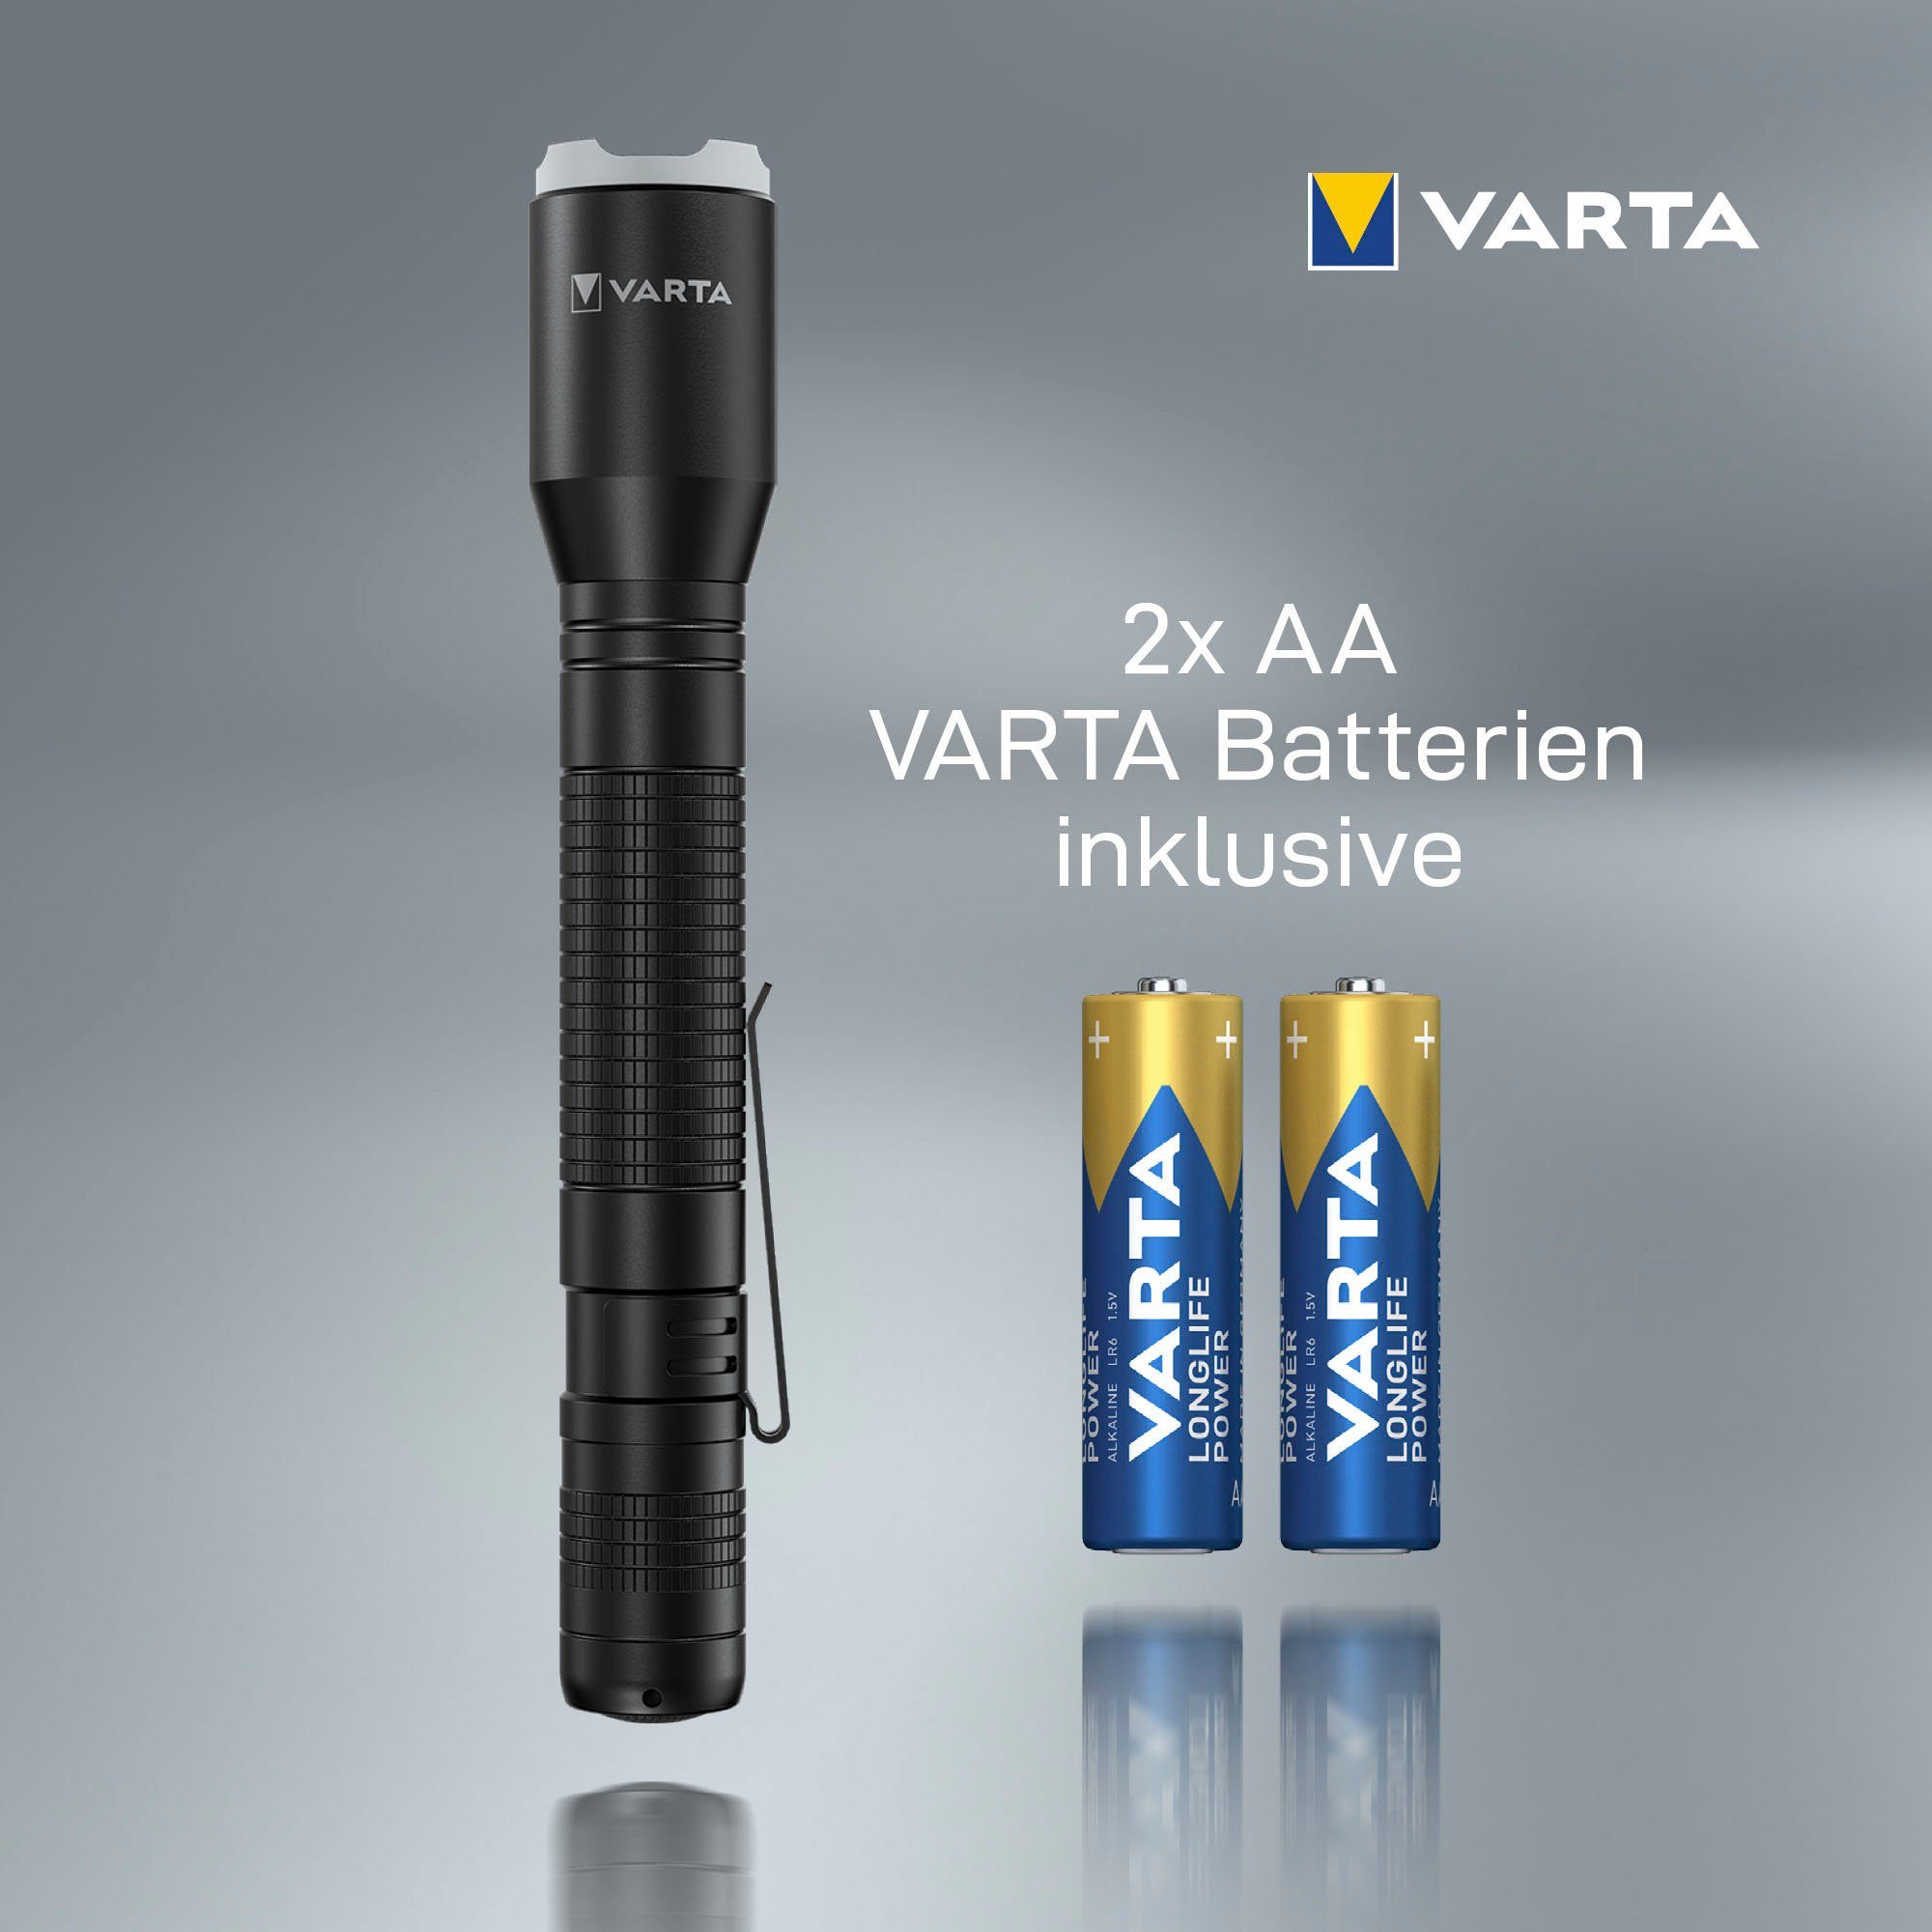 VARTA Taschenlampe Aluminium Light F20 Pro (1-St), Eloxiertes  Aluminiumgehäuse, strukturierte Gehäuseoberfläche für maximalen Grip